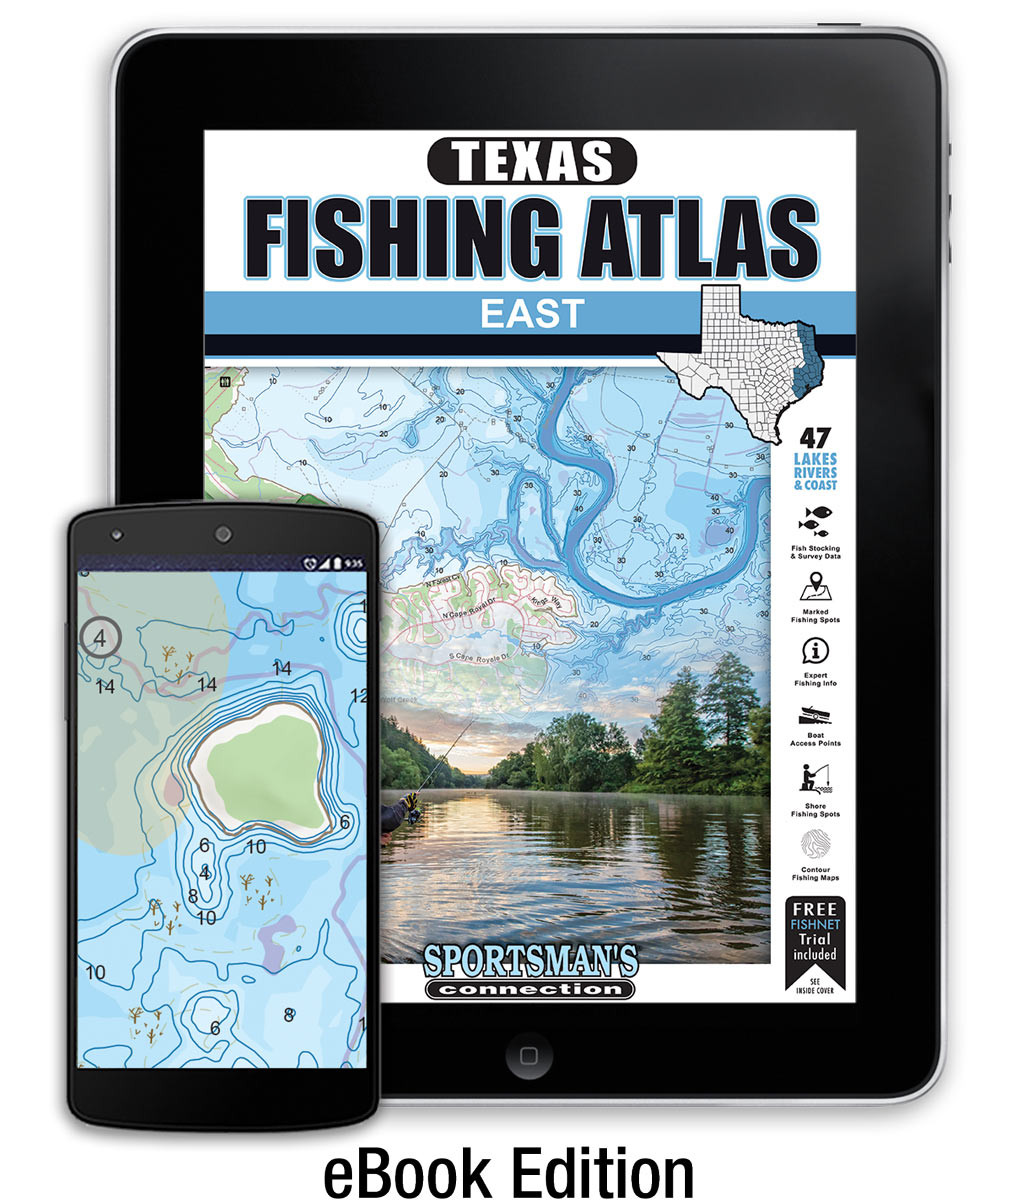 East Texas Fishing Atlas eBook